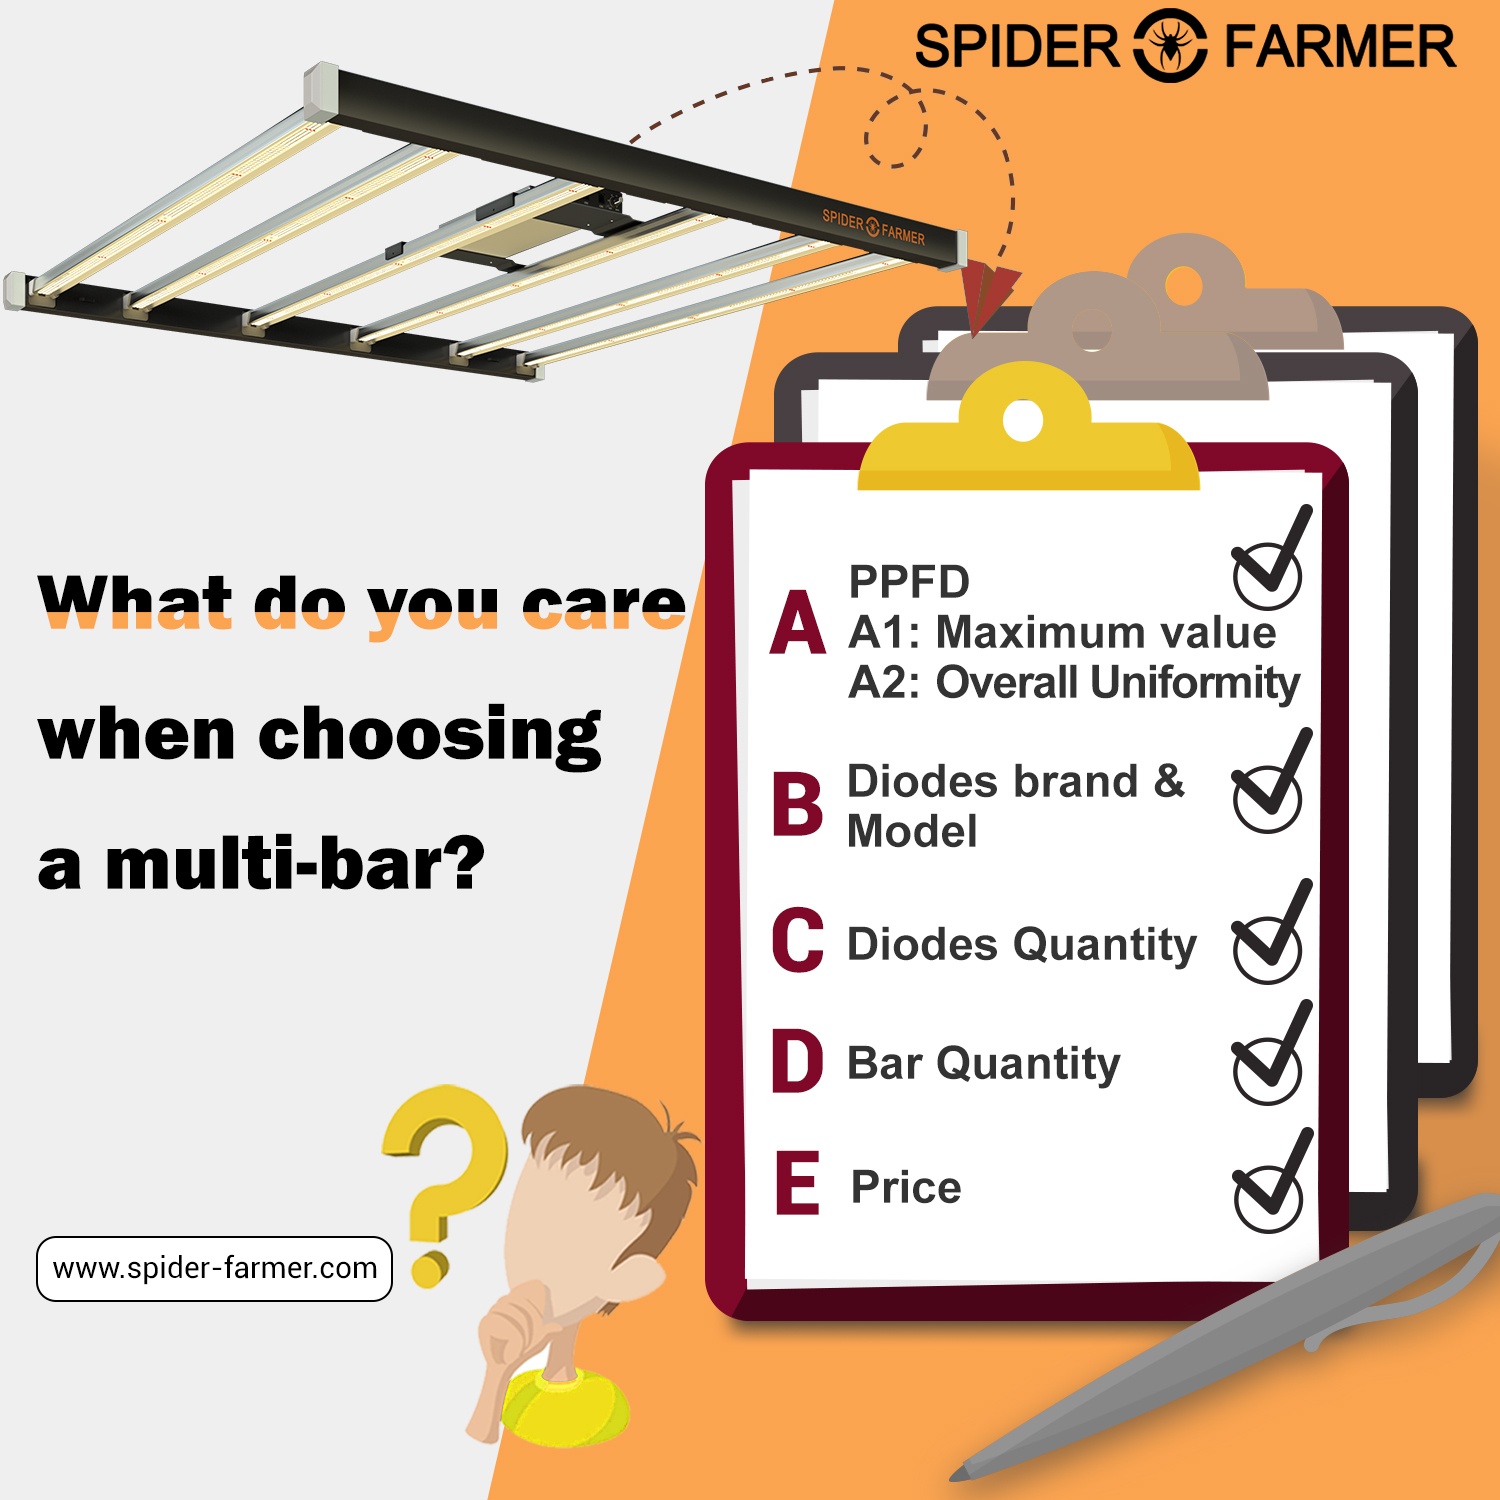 Spider farmer survey what do you care when you choosing a multi bar